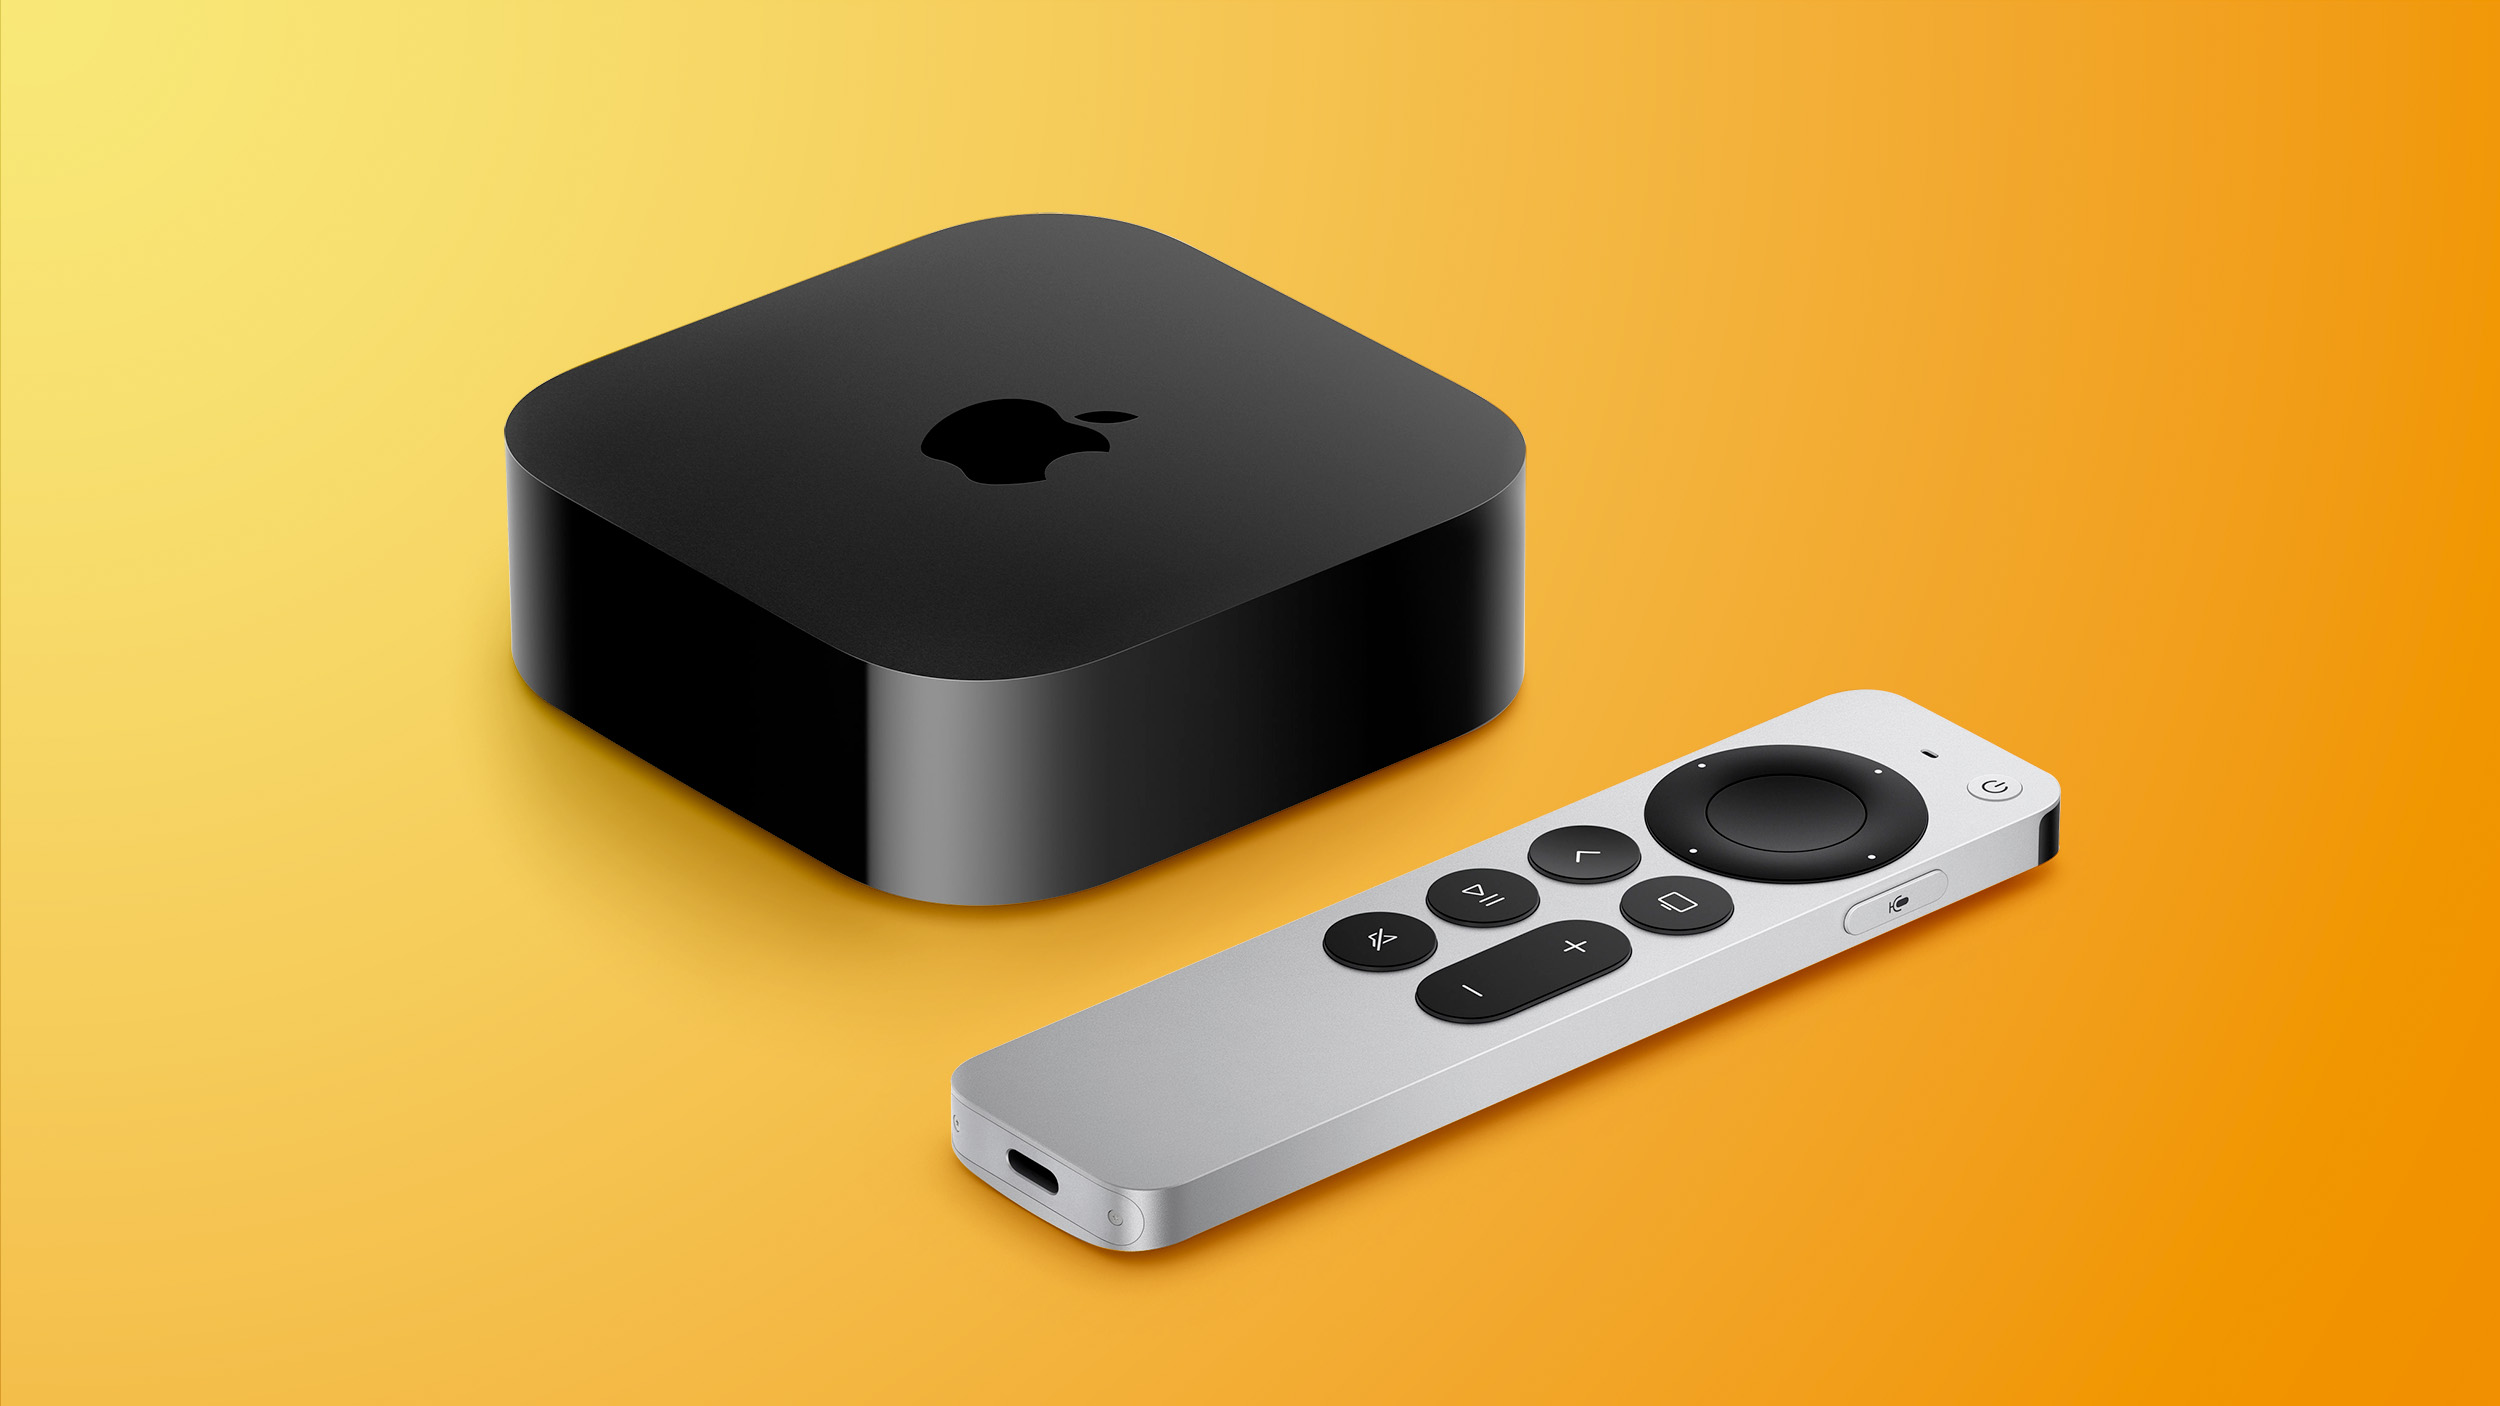 Dental Beskrivelse Indsprøjtning Apple TV: Just Updated with A15 Chip and Cheaper Price